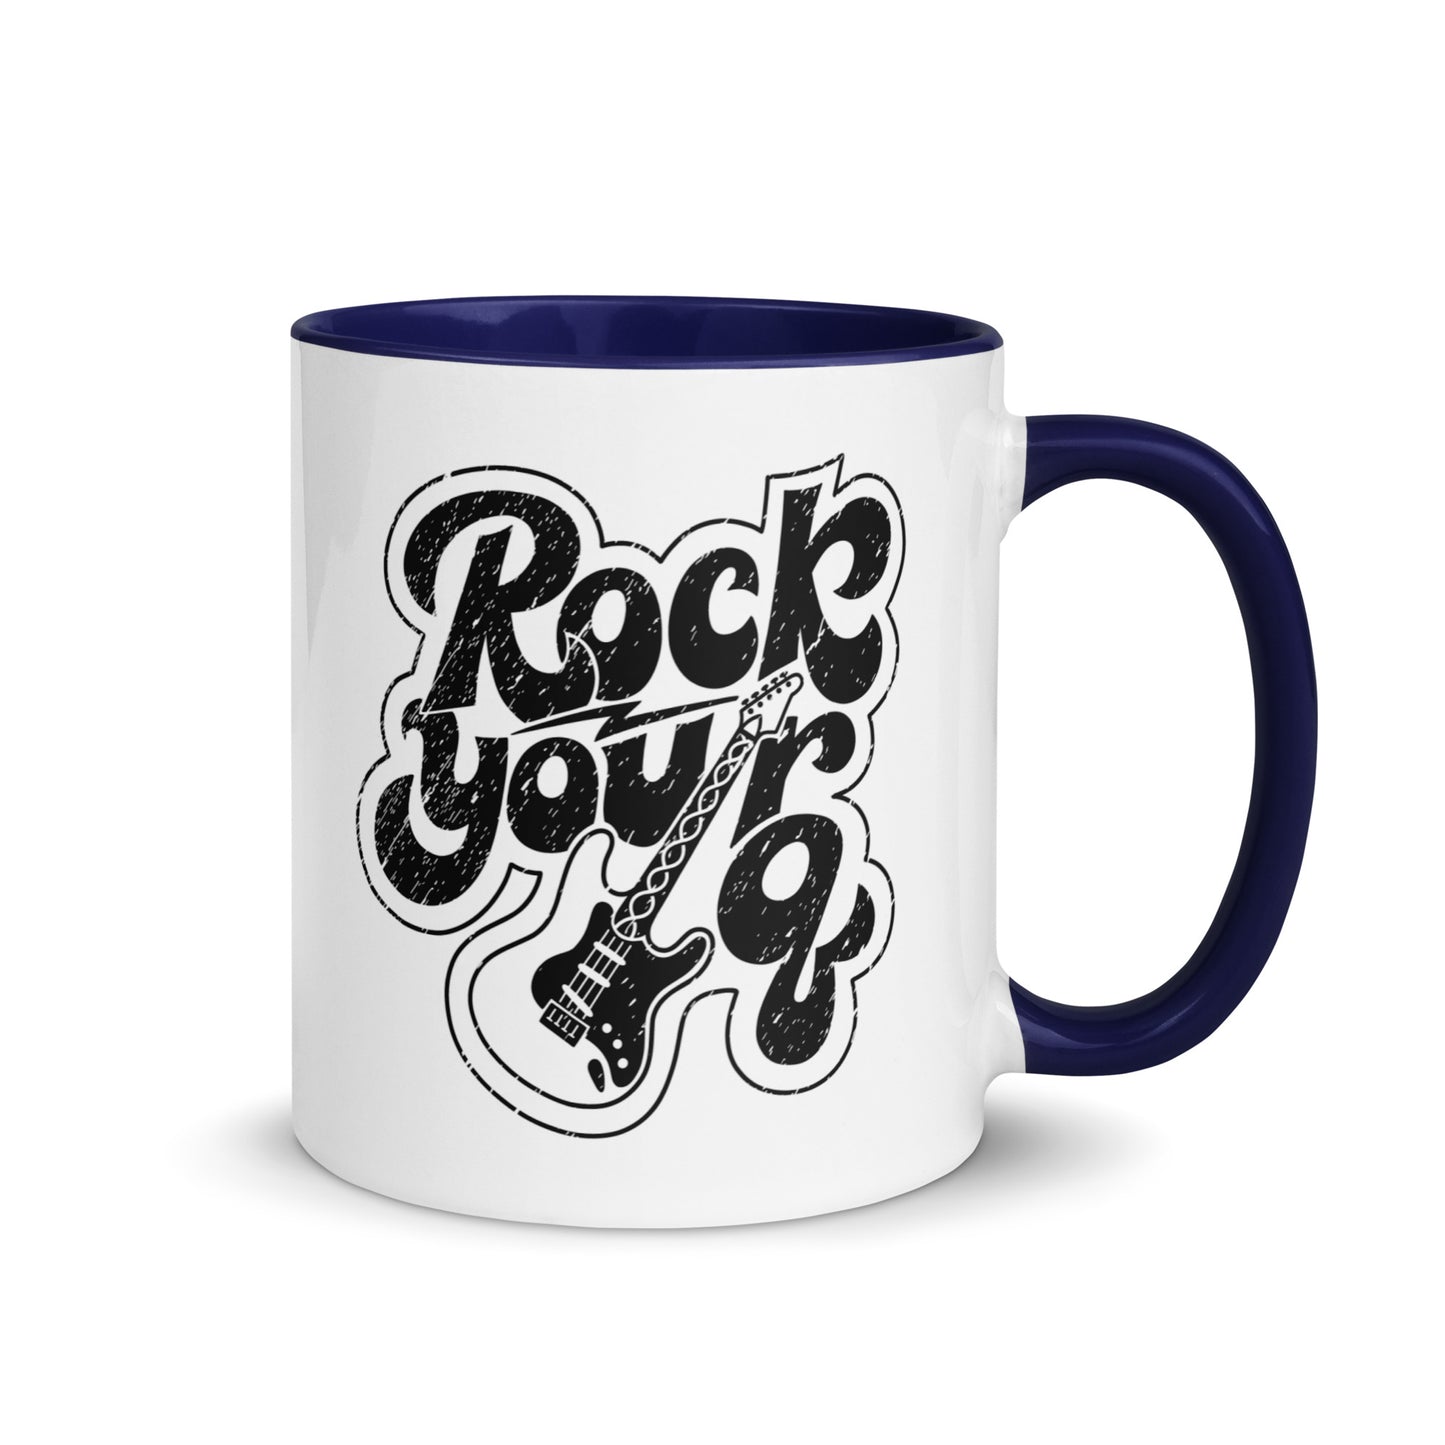 Rock Your Q — 11oz Mug